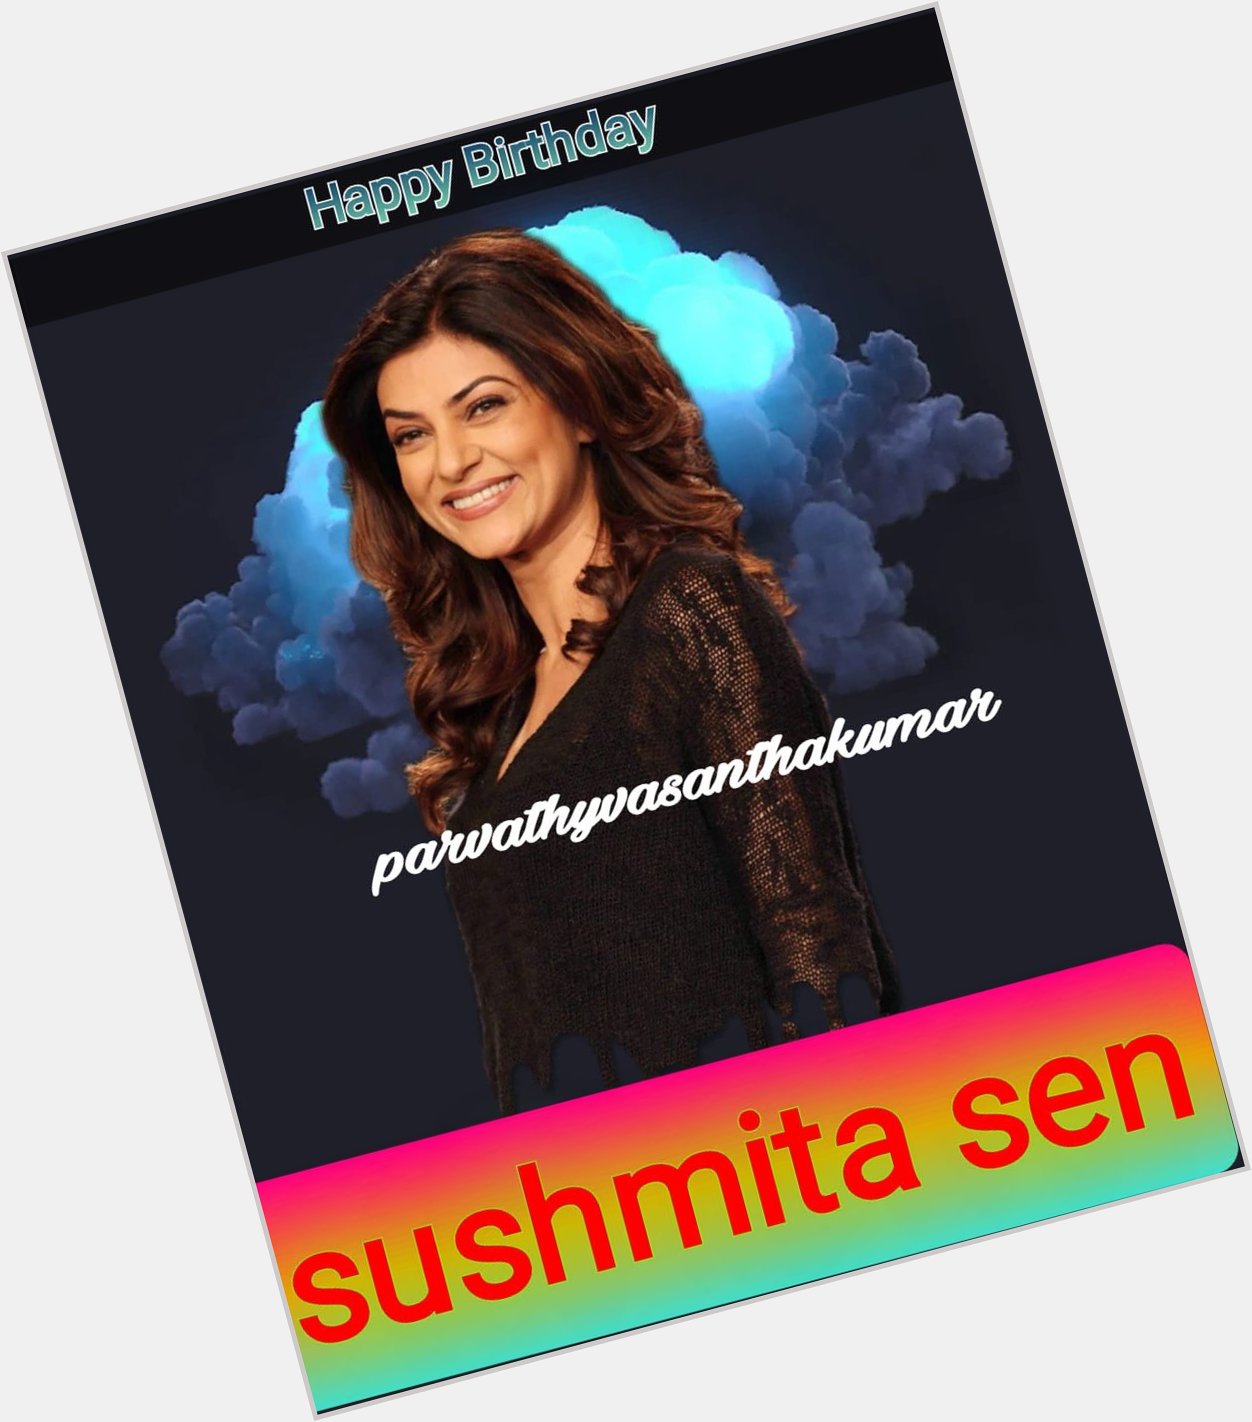 Happy birthday
Sushmita Sen   